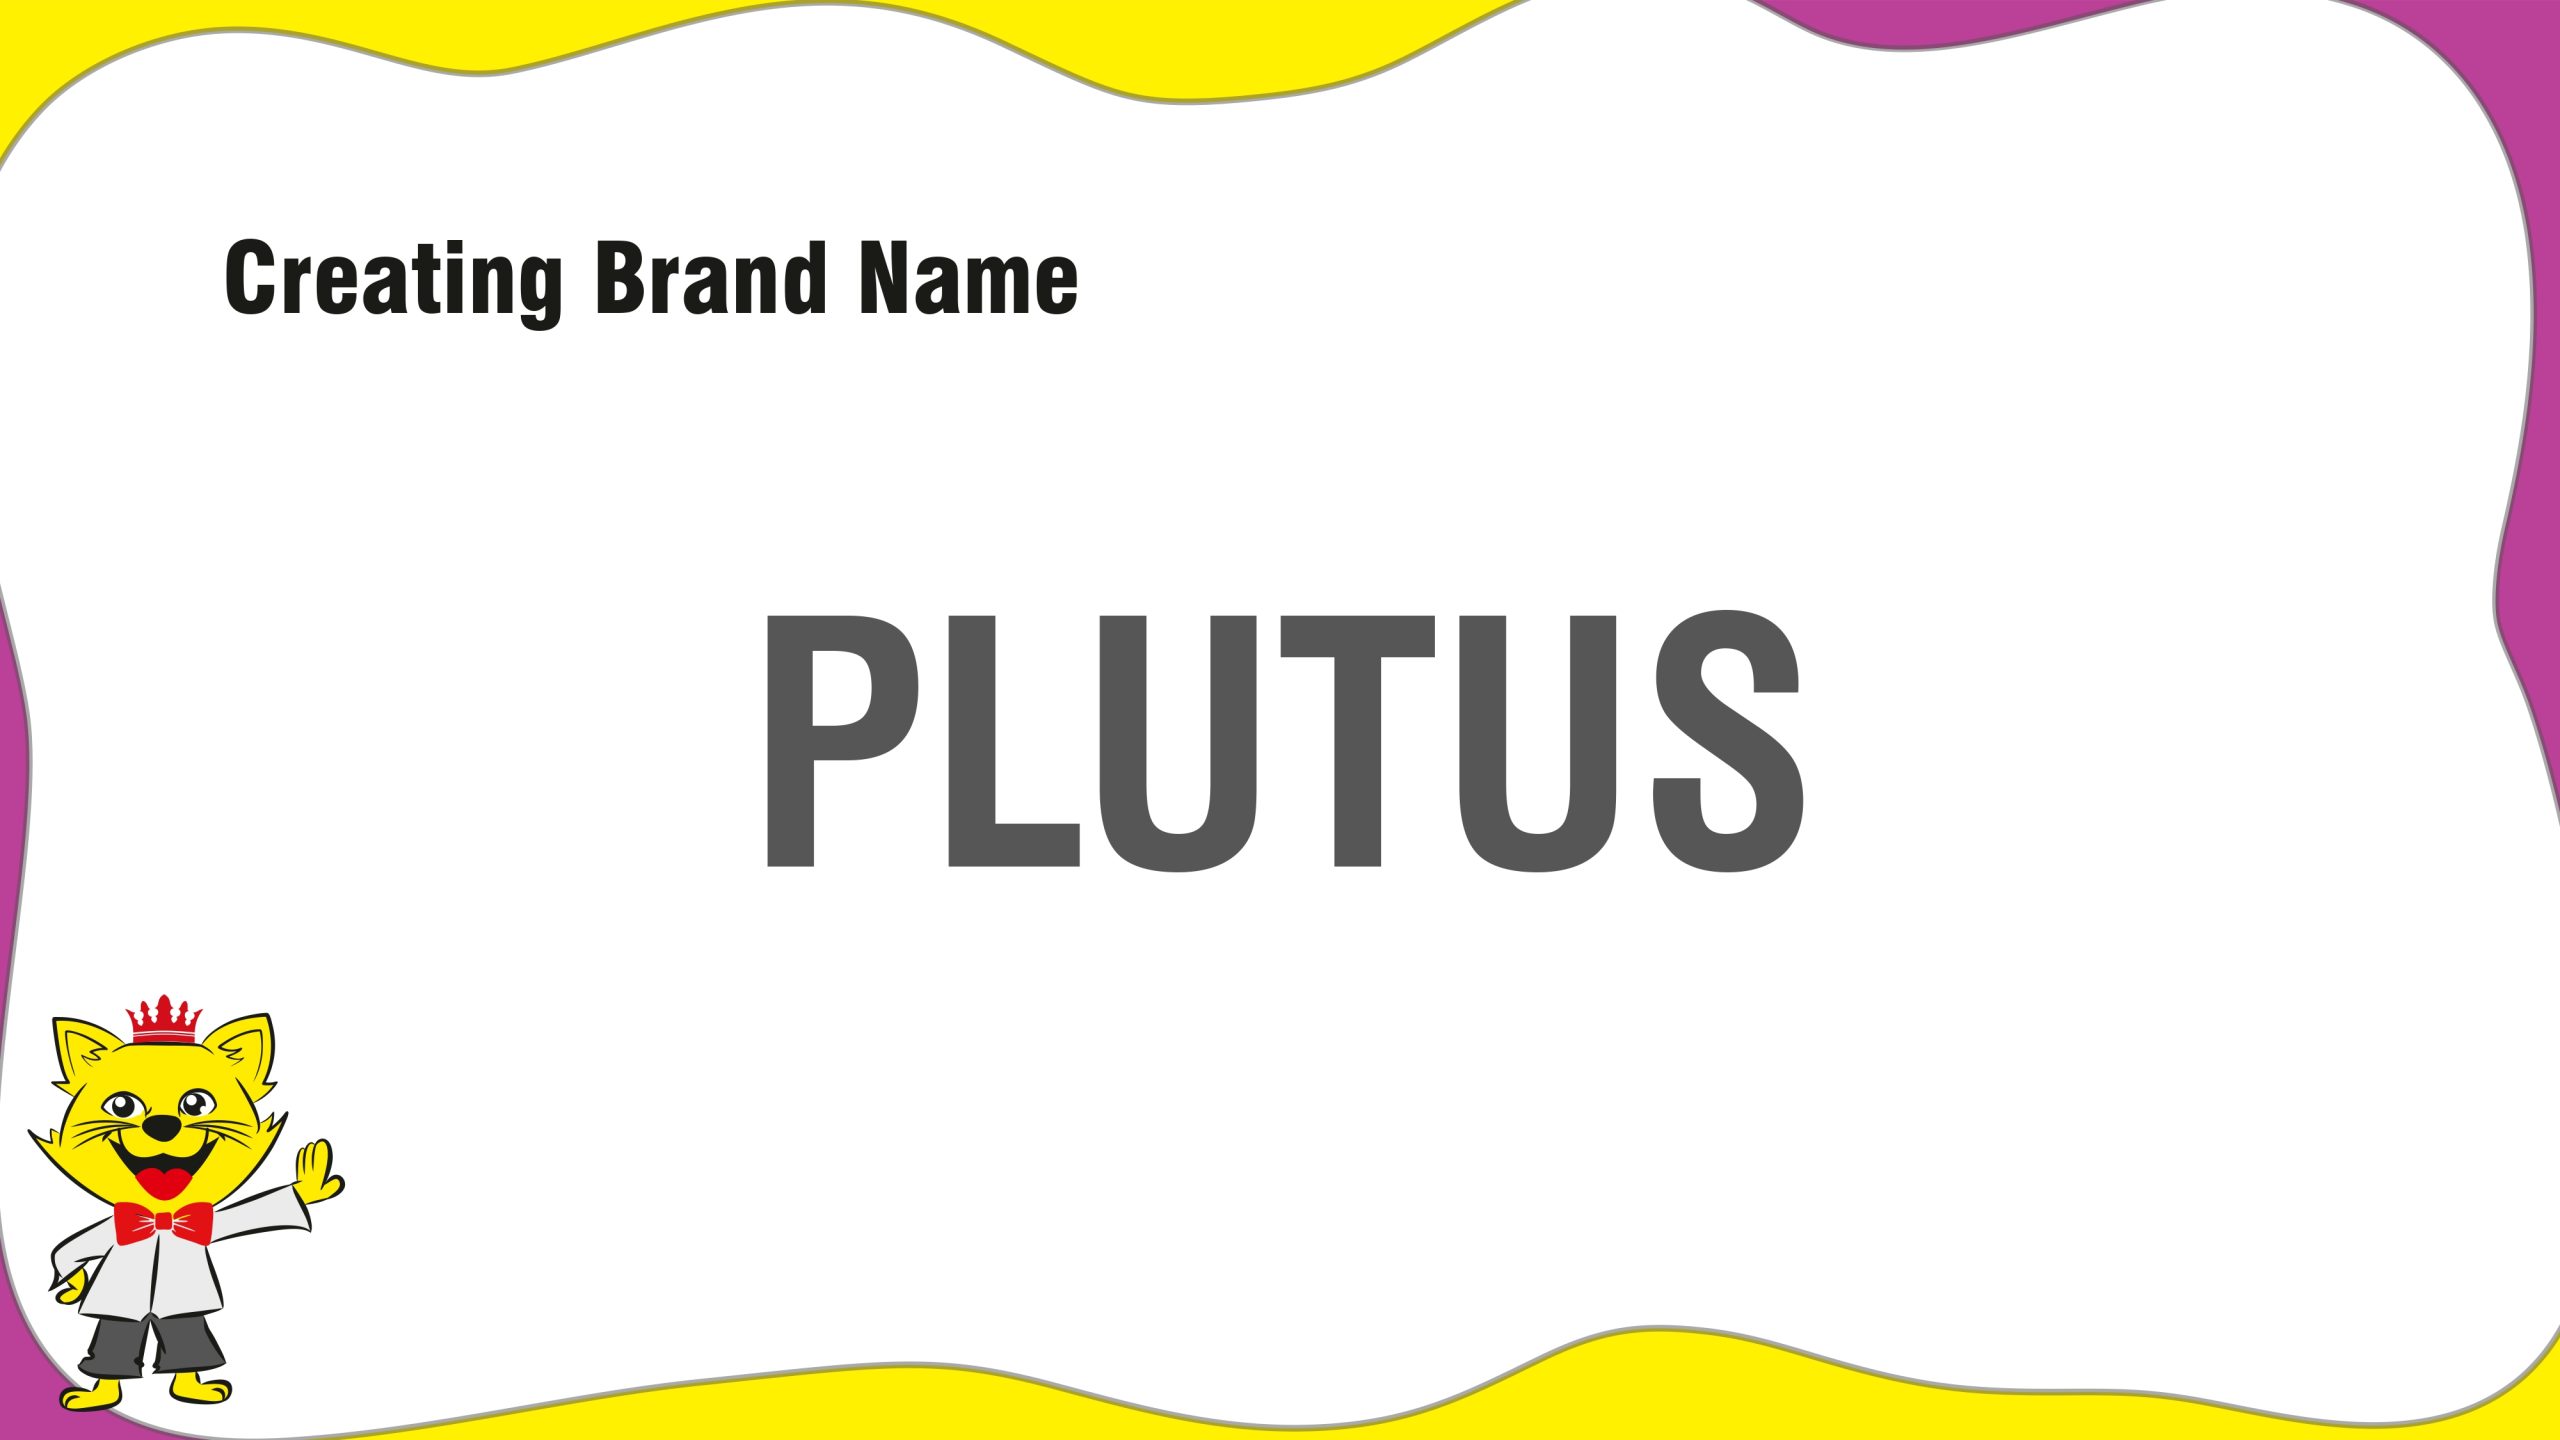 Plutus Case Study